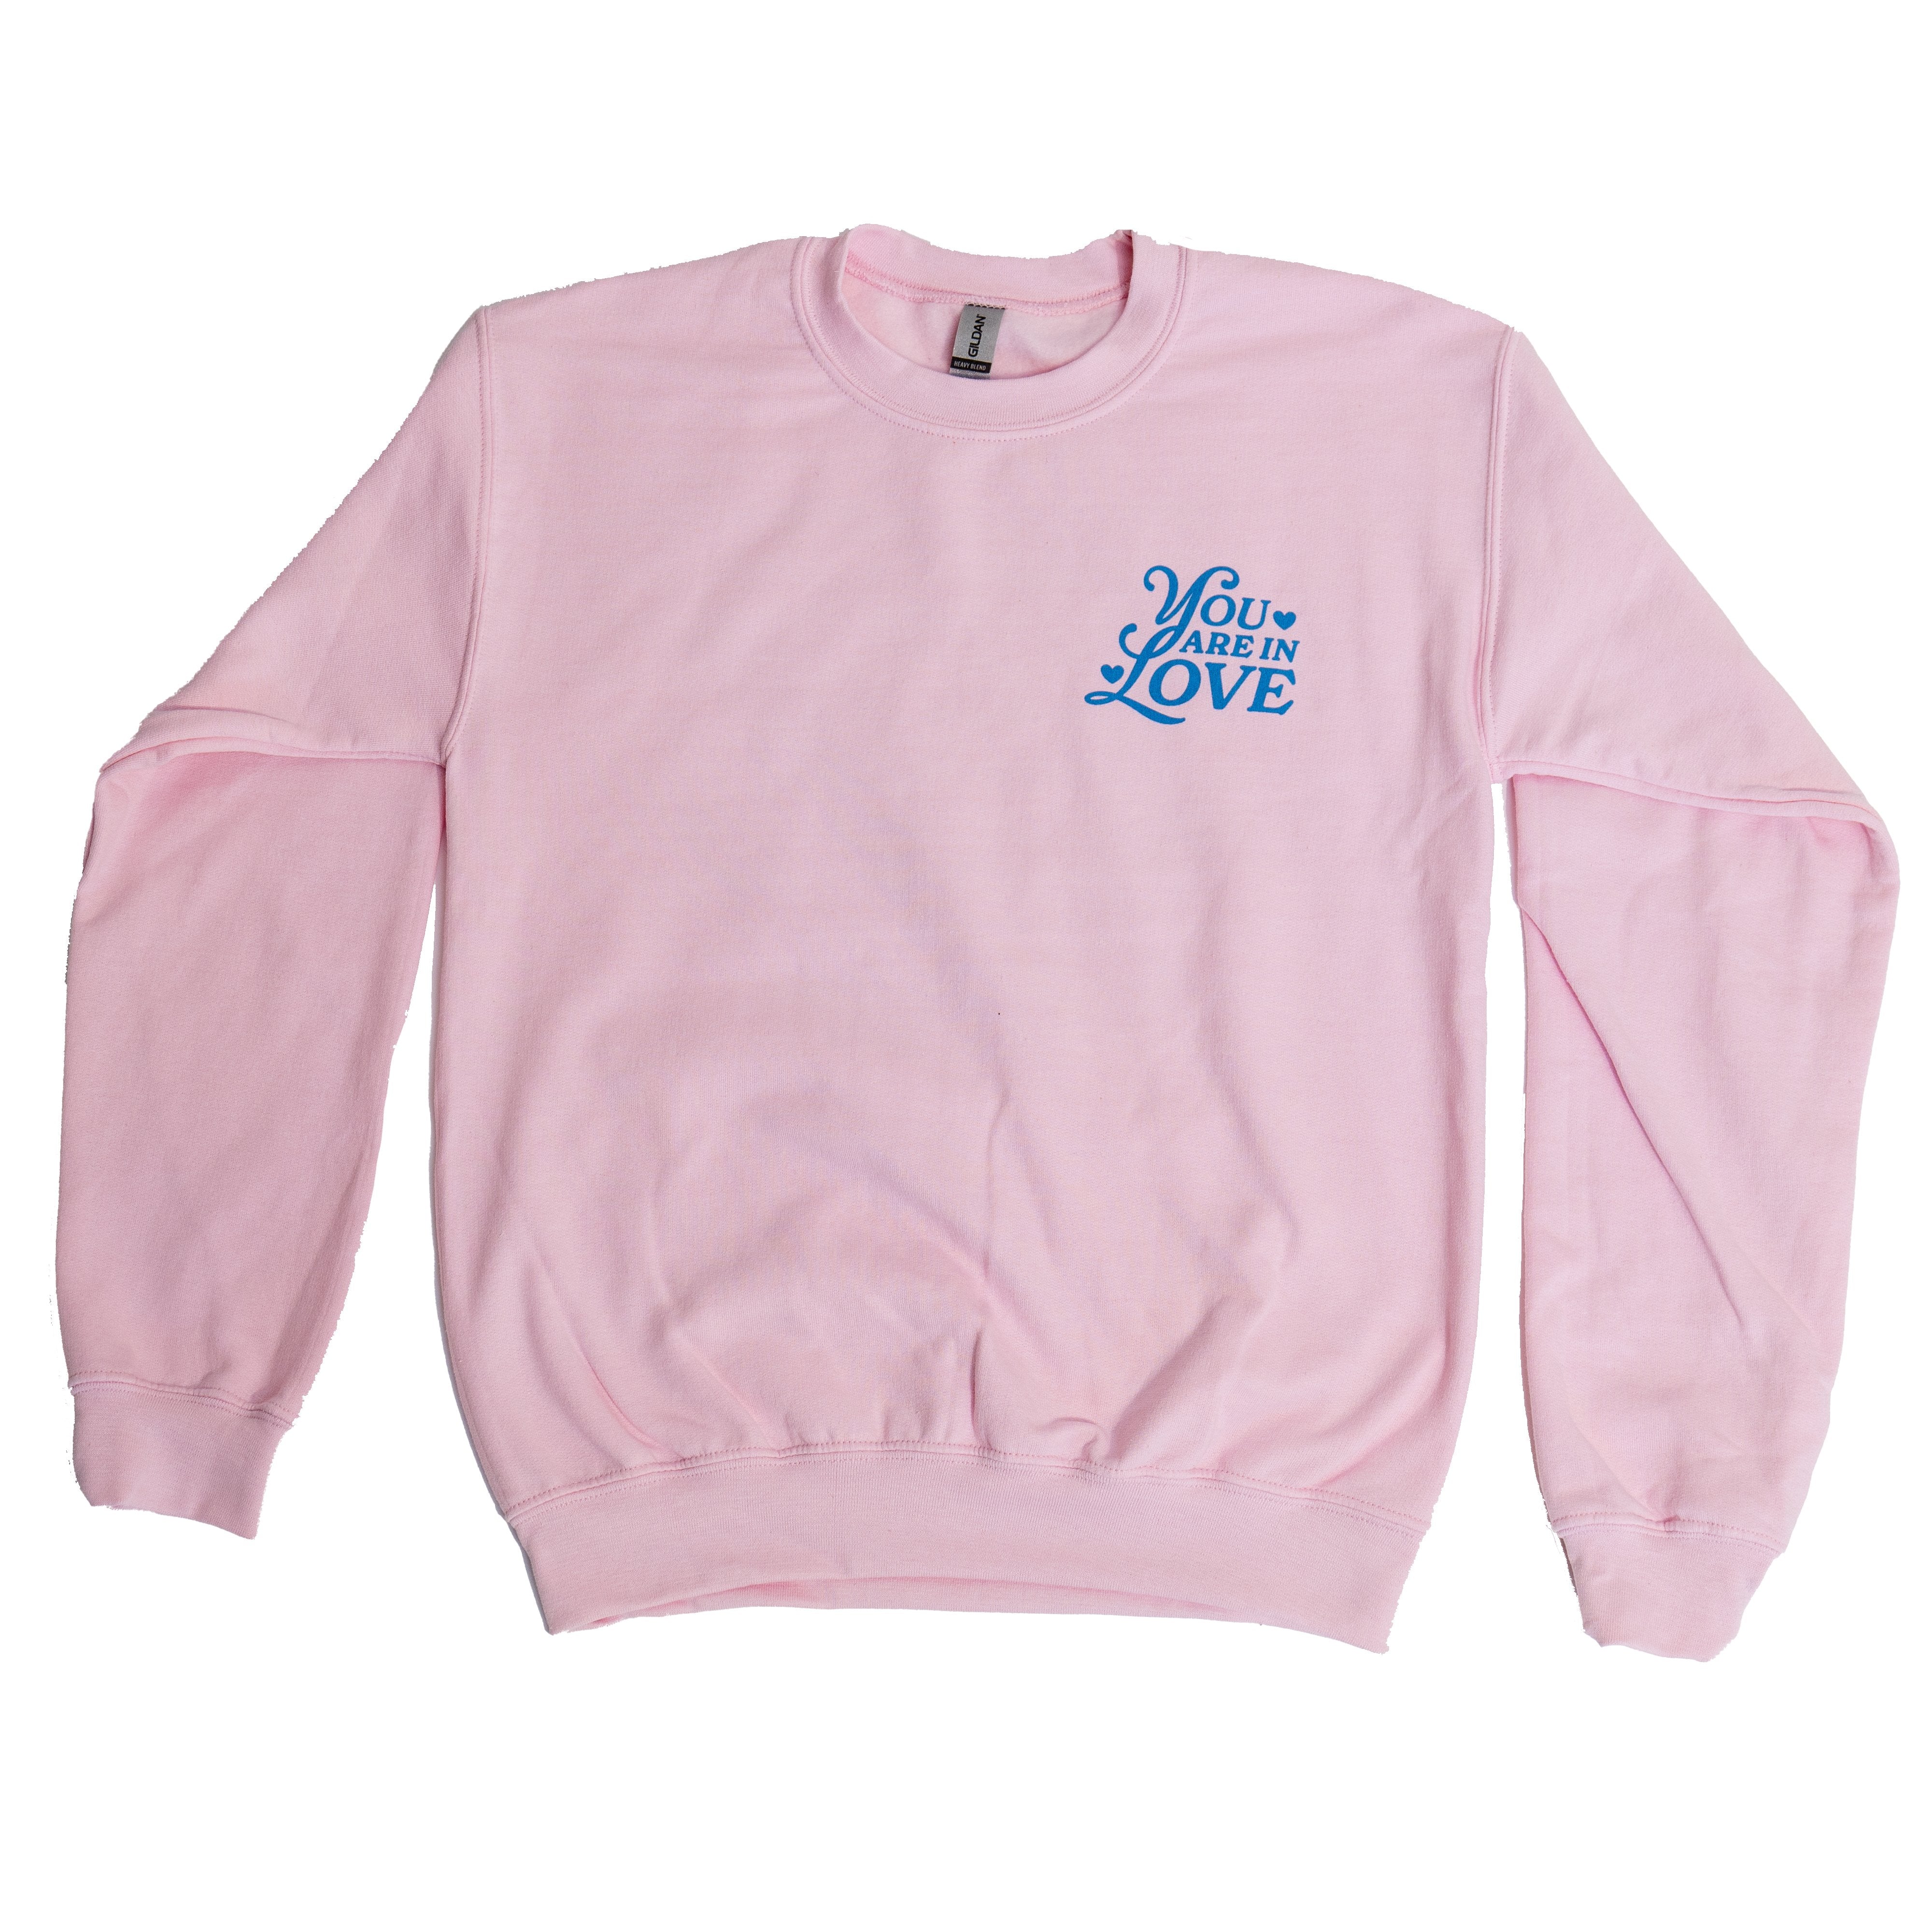 You Are In Love Sweatshirt - Emacity Threads